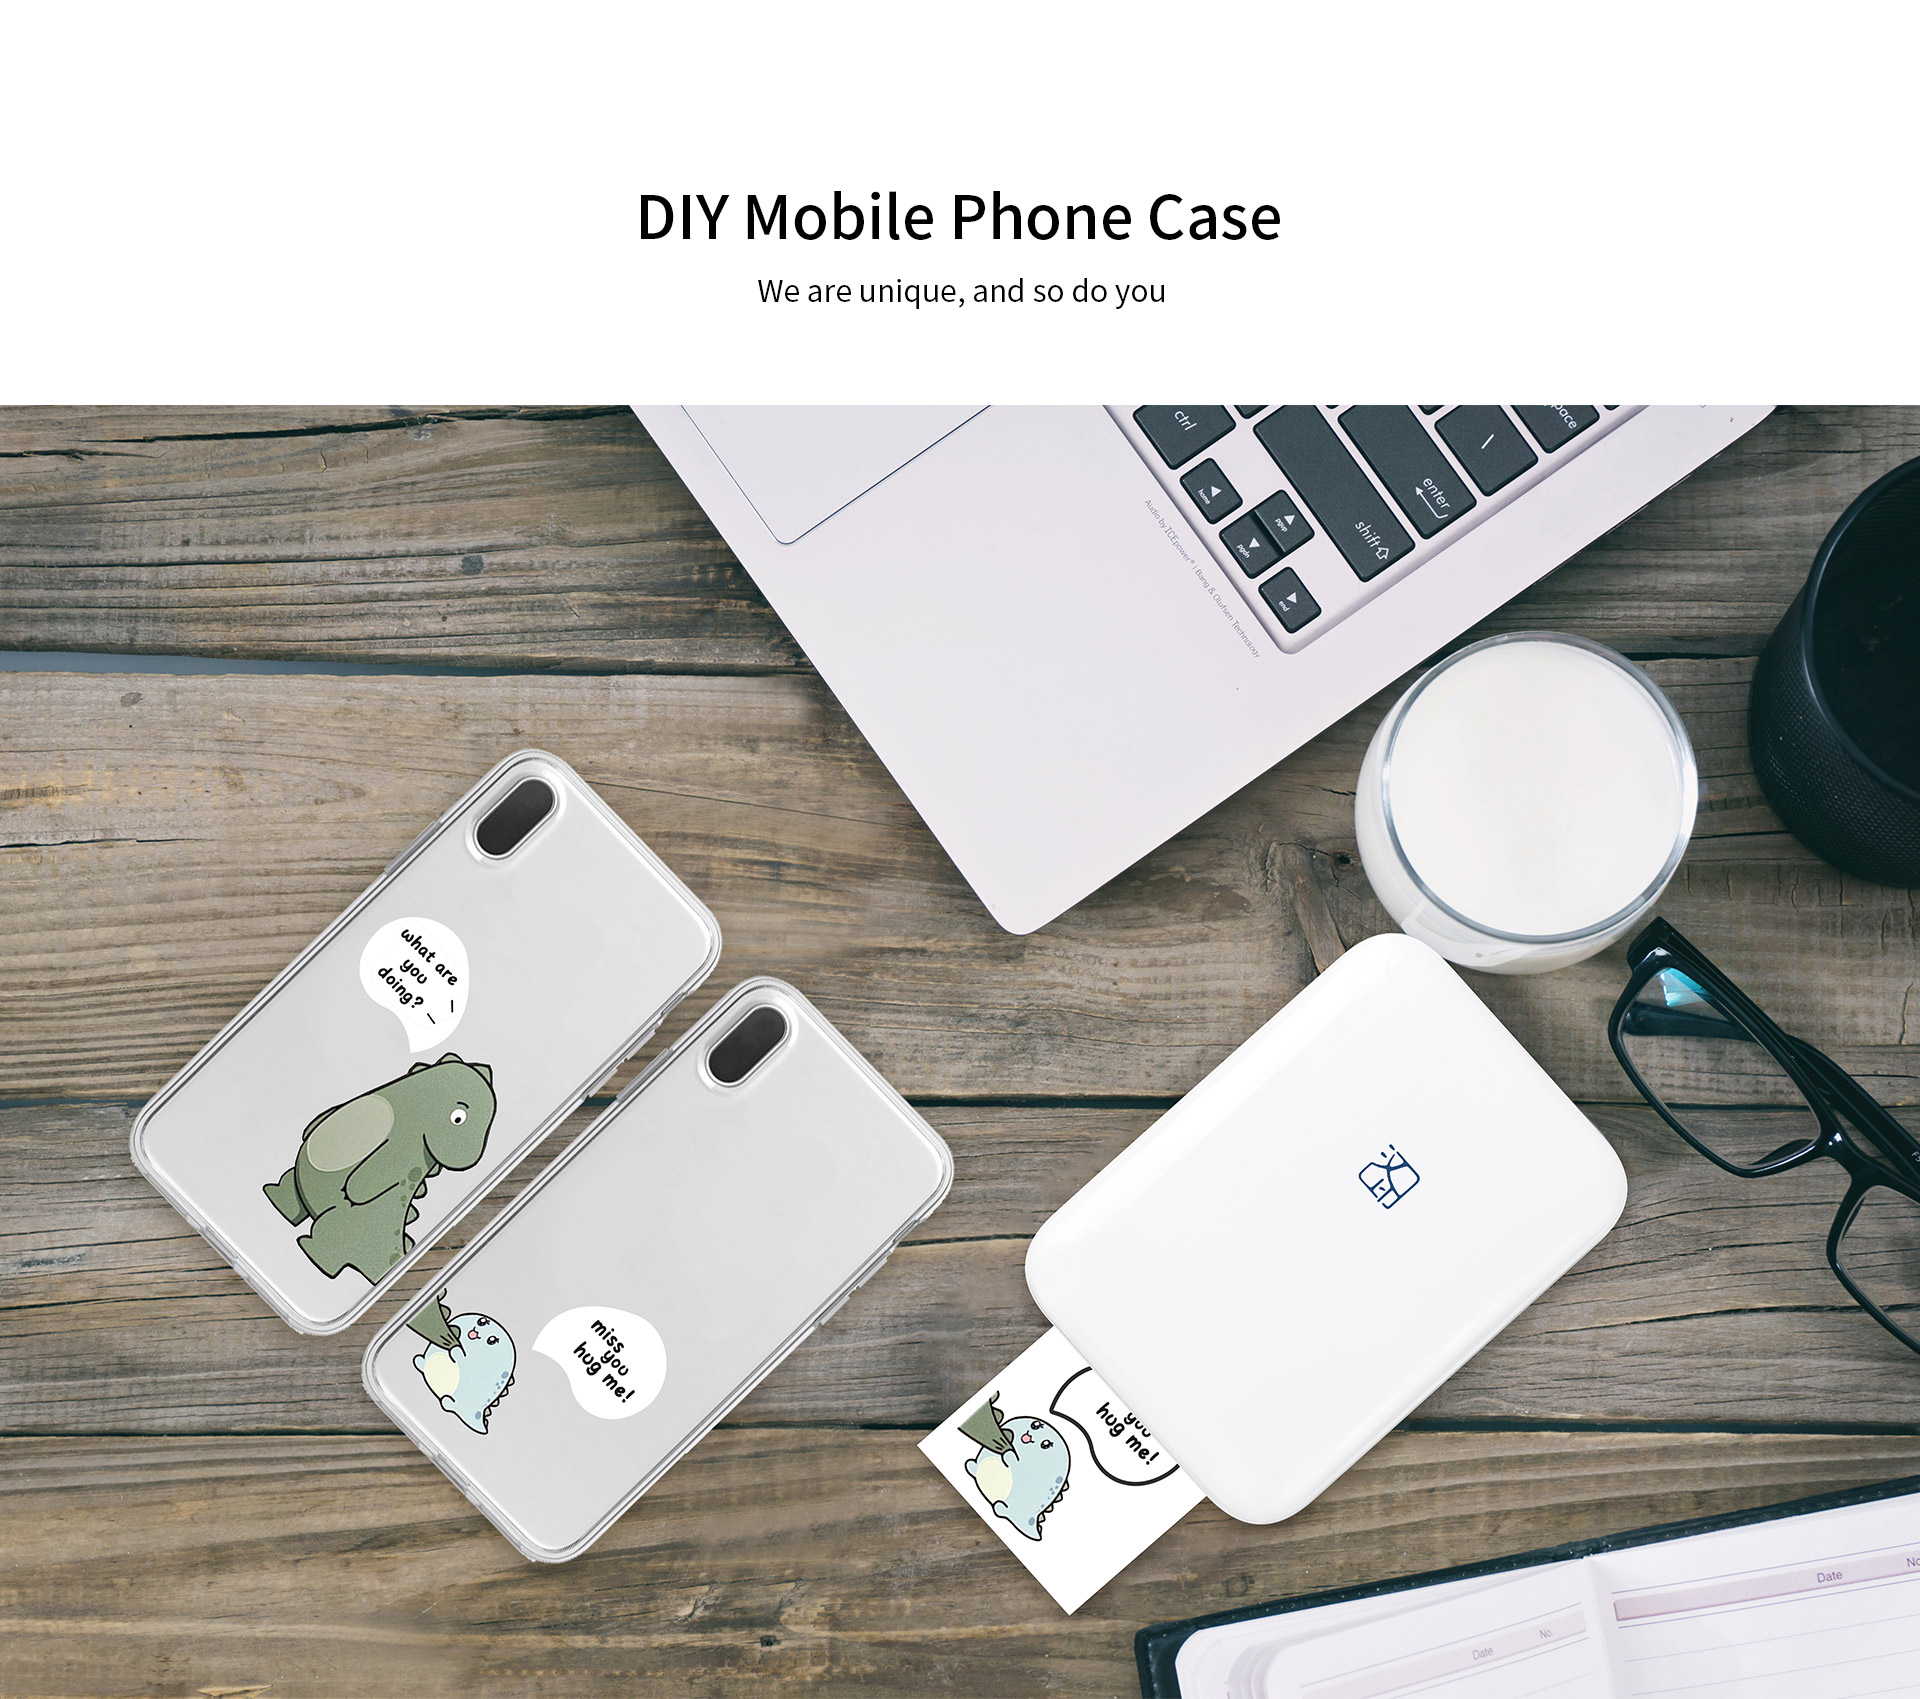 DIY Mobile Phone Case